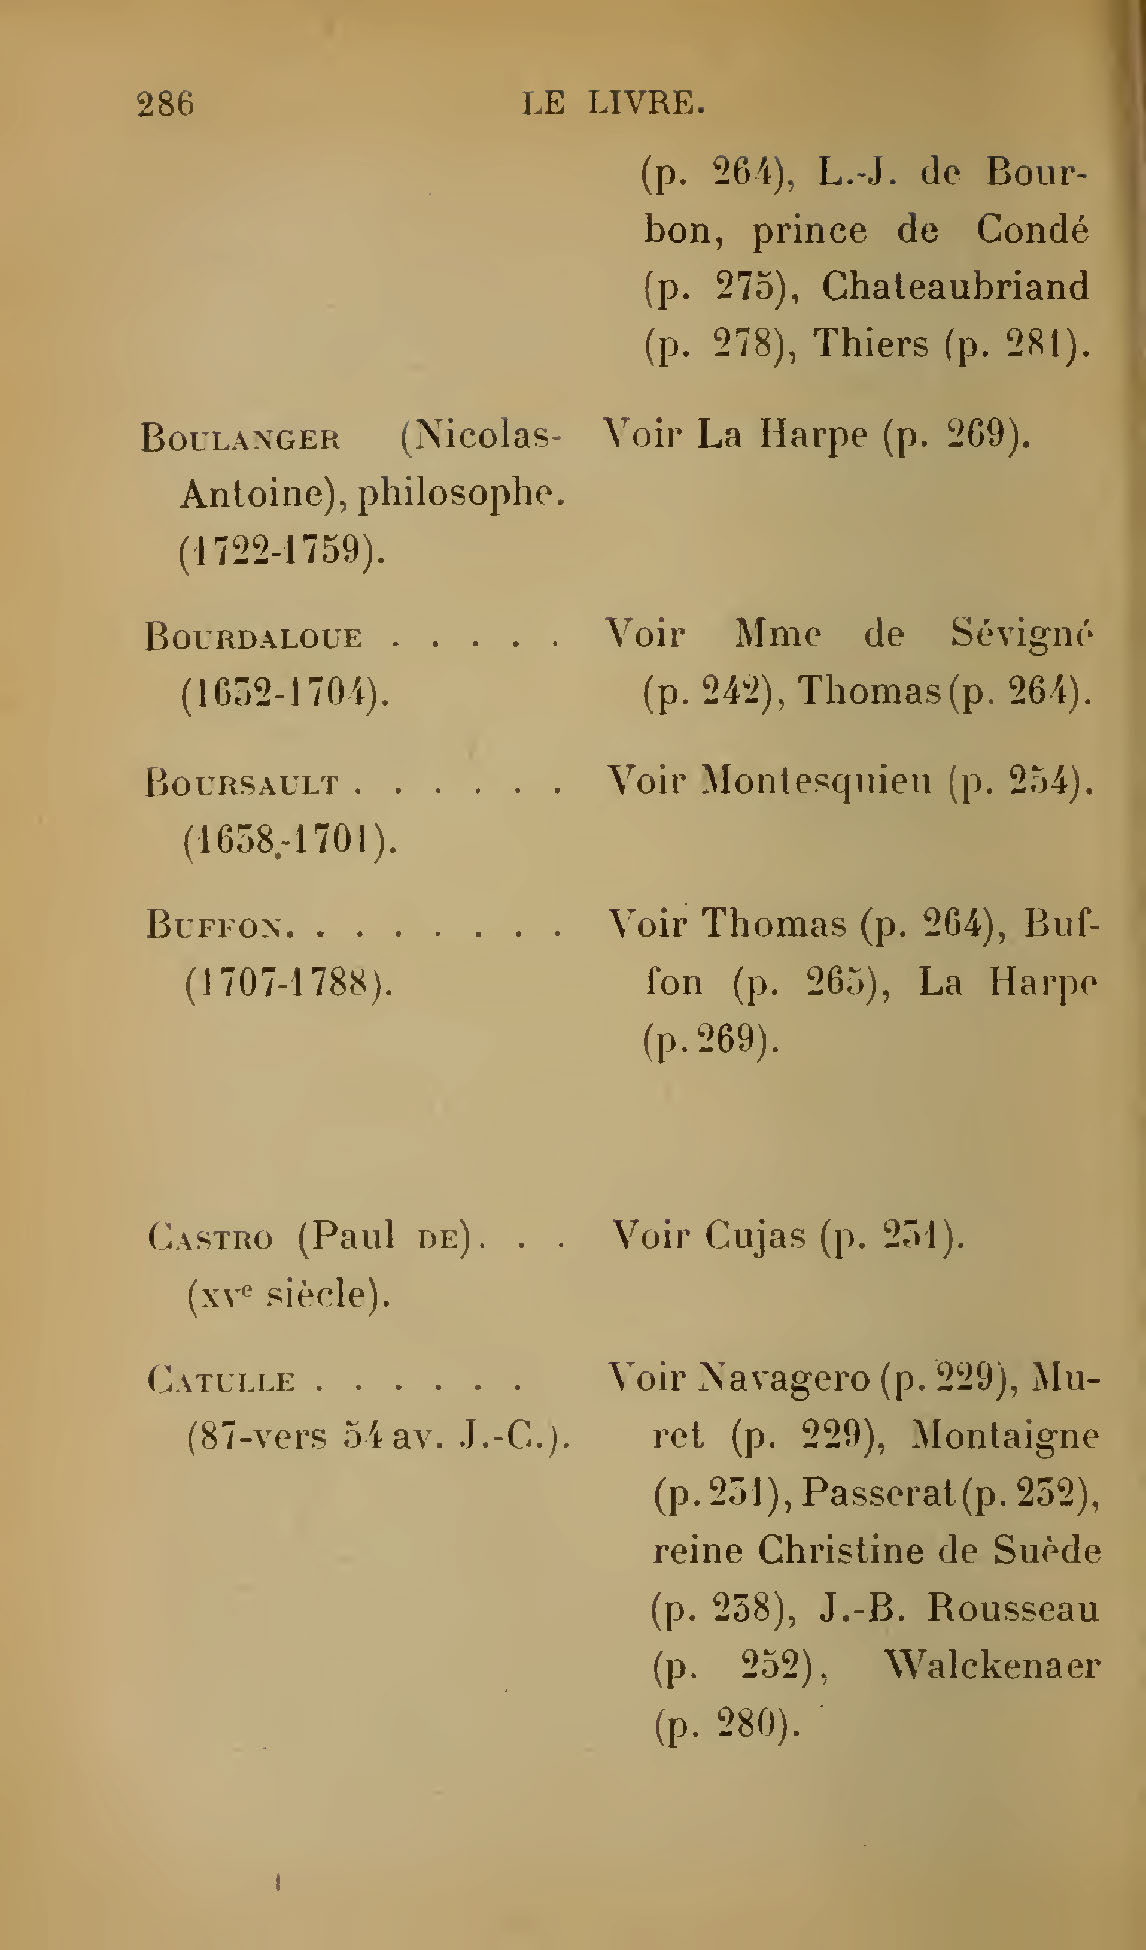 Albert Cim, Le Livre, t. I, p. 284.